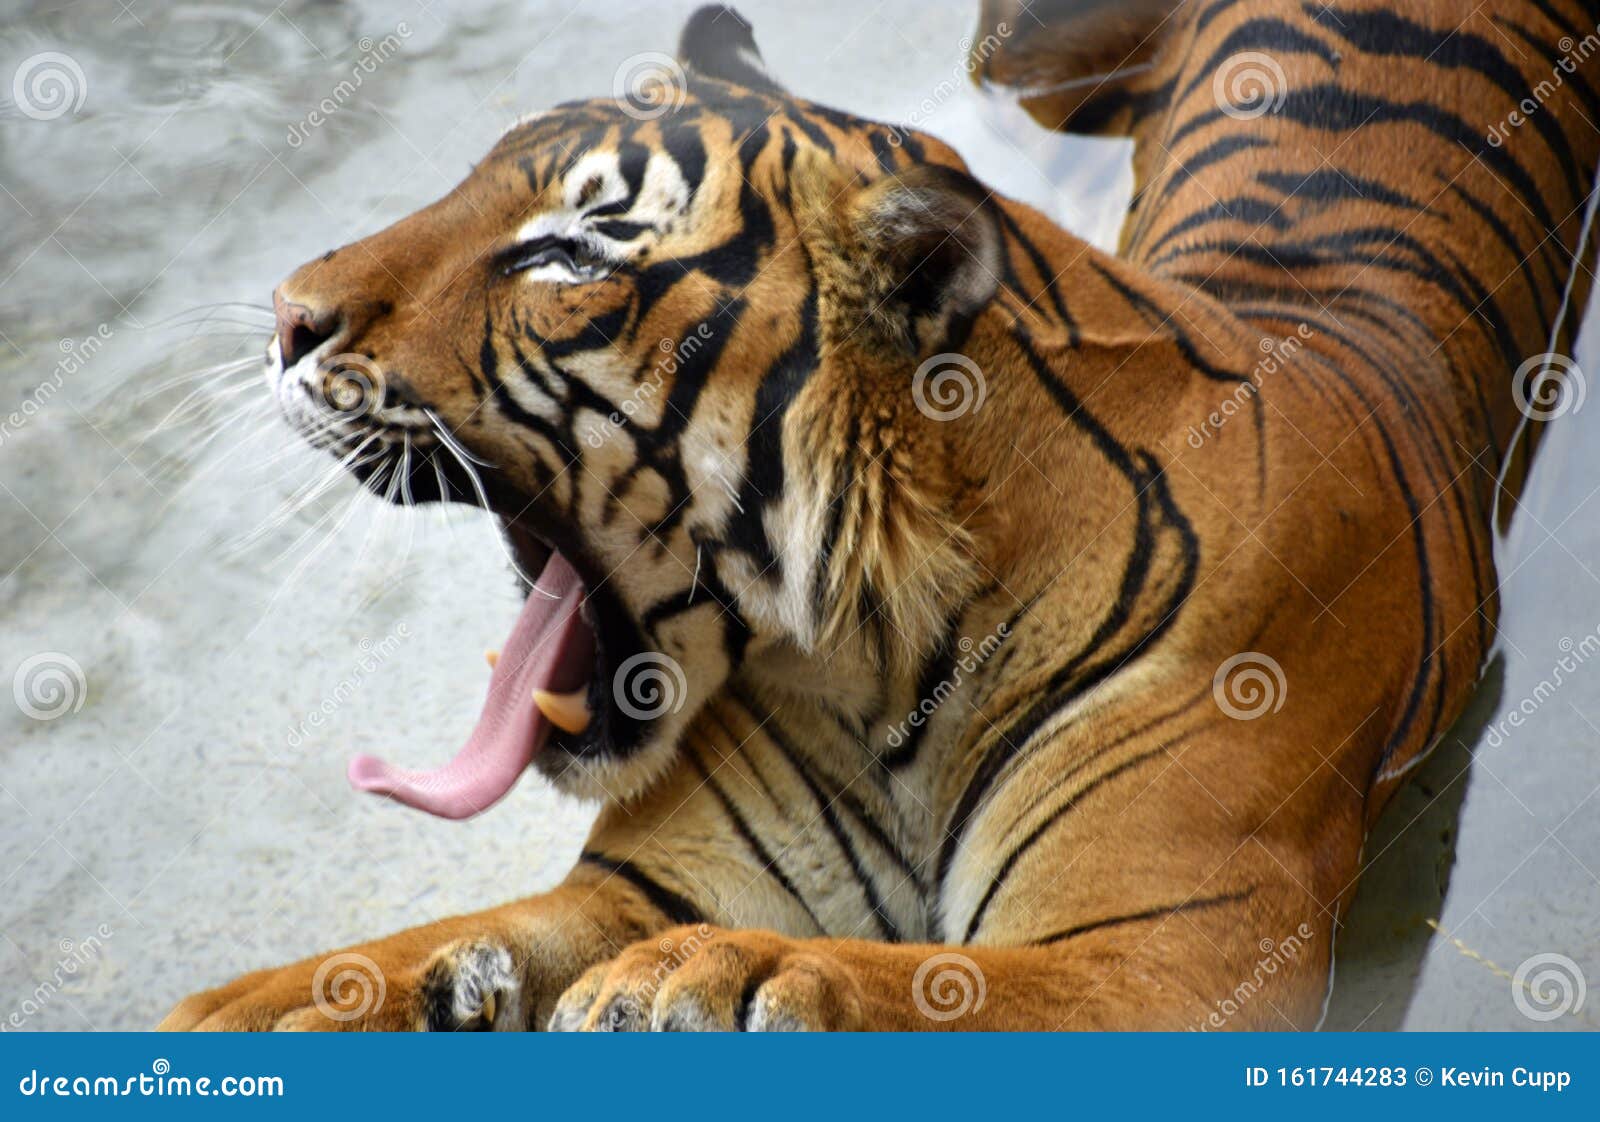 penari, the malayan tiger at rhe rio grande zoo